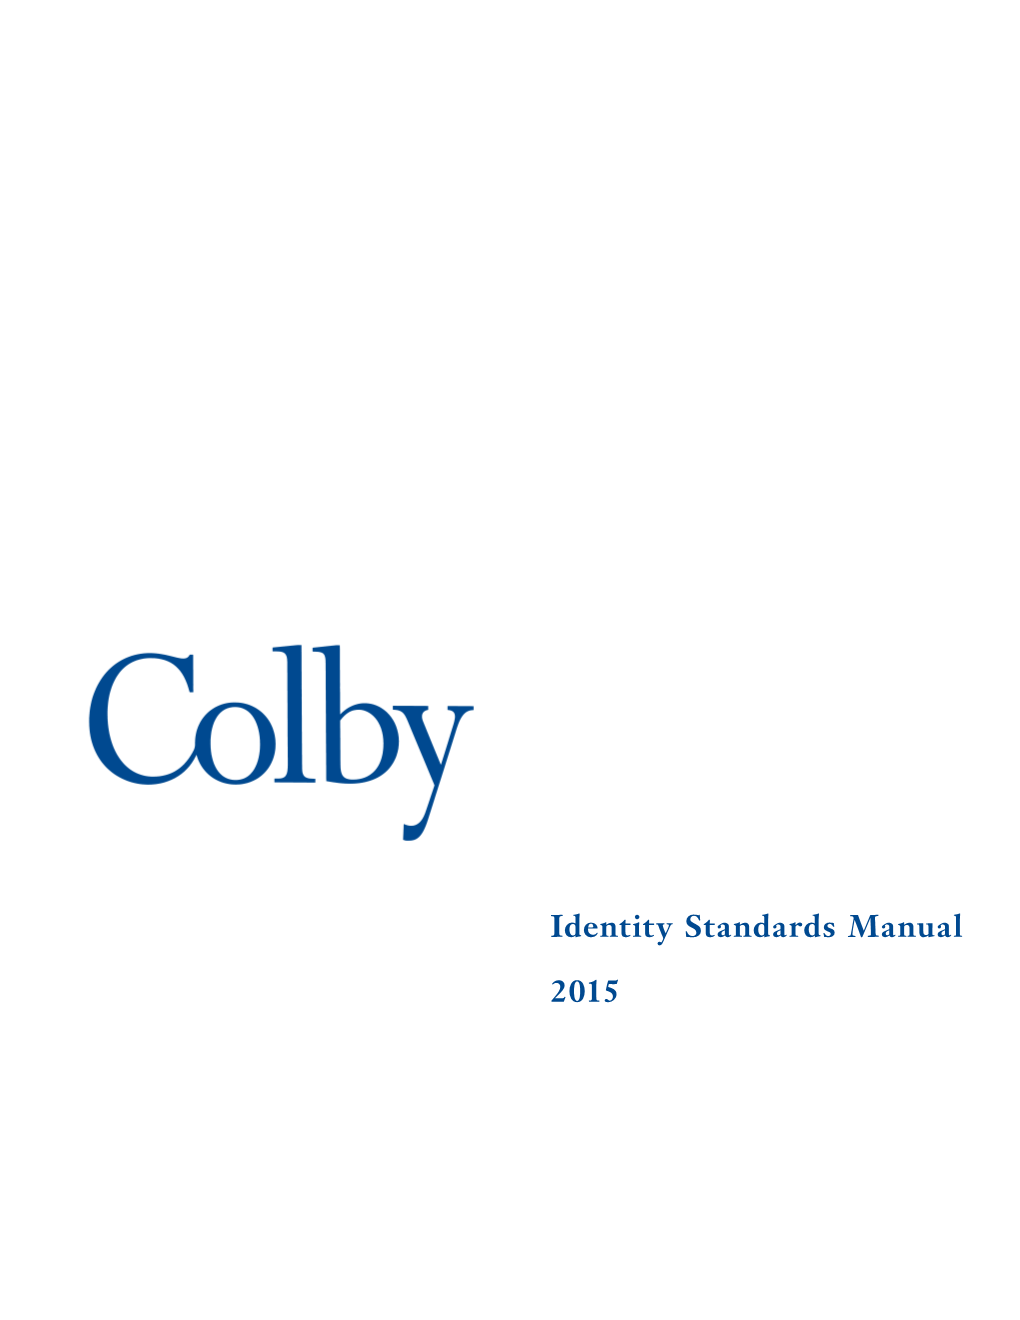 Identity Standards Manual 2015